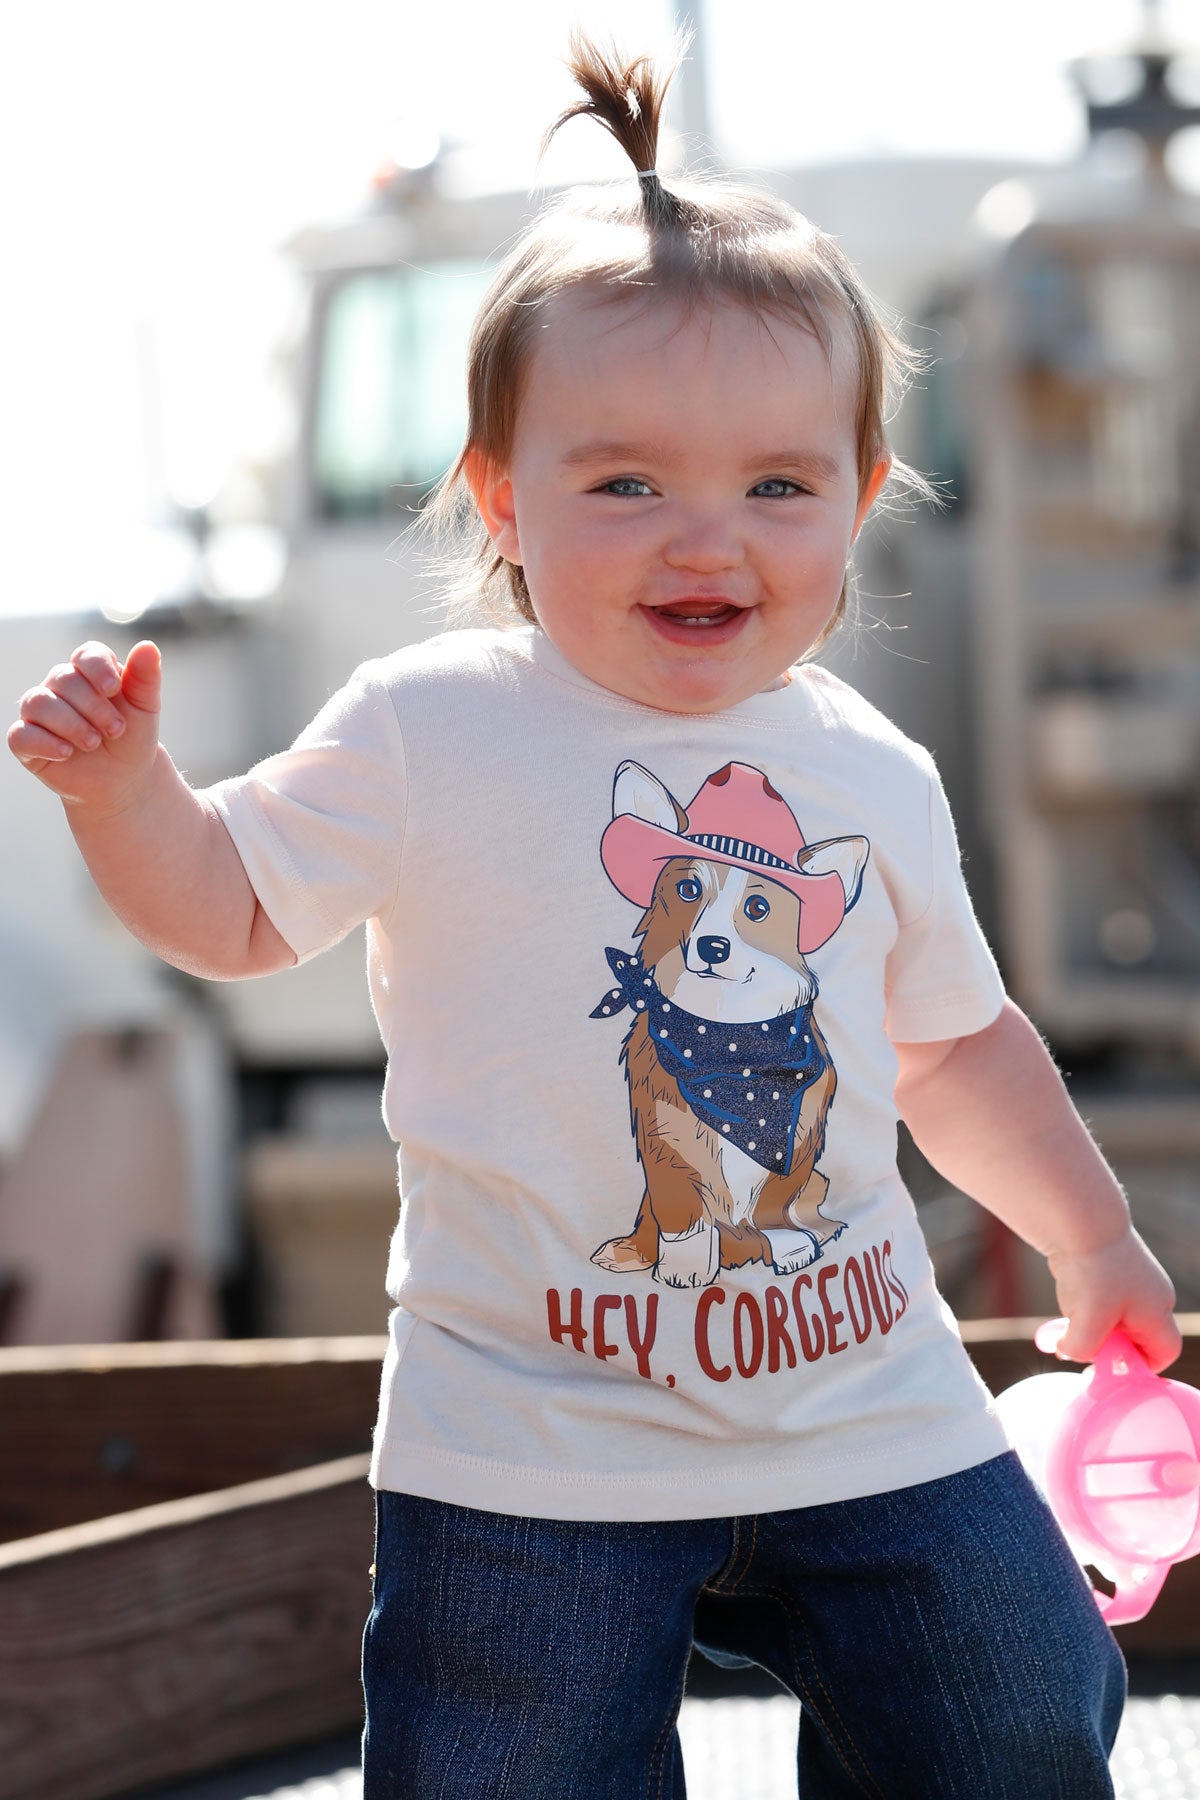 Cruel Toddler Girl's "Hey, Corgeous" T-Shirt